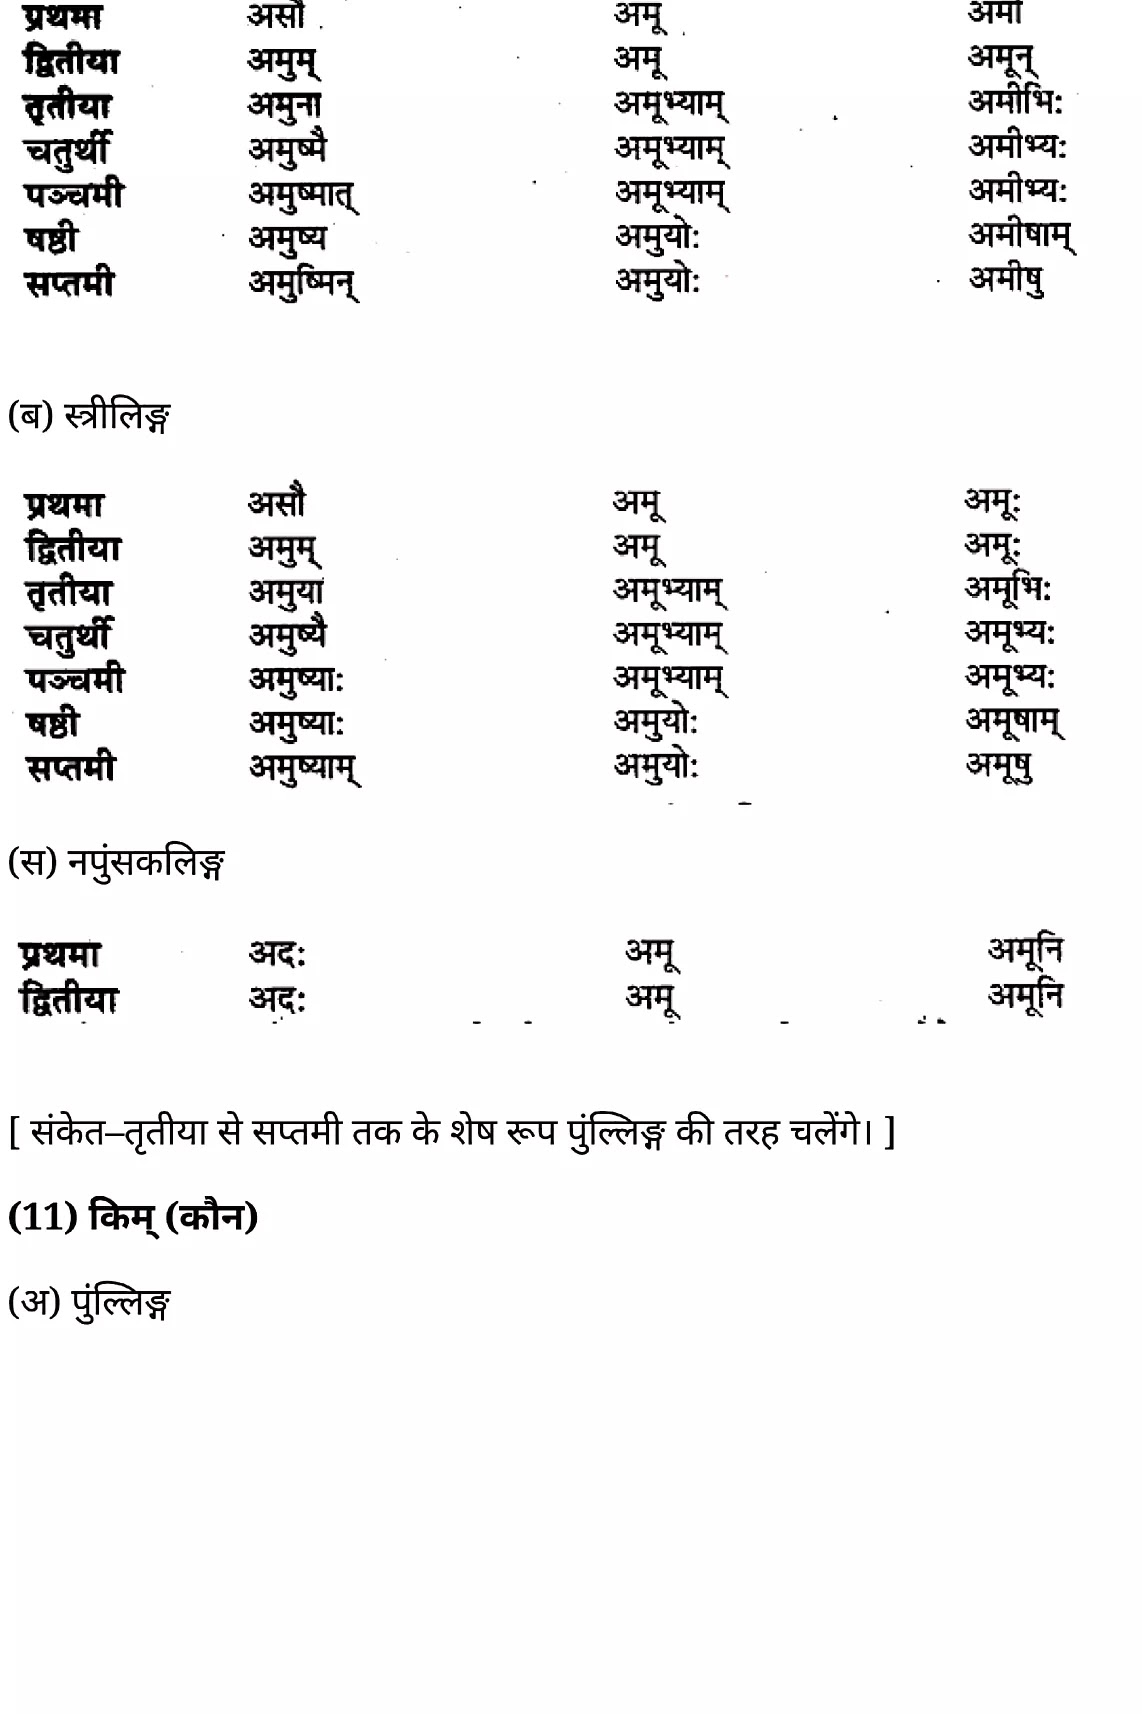 कक्षा 11 साहित्यिक हिंदी शब्द-रूप-प्रकरण  के नोट्स साहित्यिक हिंदी में एनसीईआरटी समाधान,   class 11 sahityik hindi shabd-roop-prakaran,  class 11 sahityik hindi shabd-roop-prakaran ncert solutions in sahityik hindi,  class 11 sahityik hindi shabd-roop-prakaran notes in sahityik hindi,  class 11 sahityik hindi shabd-roop-prakaran question answer,  class 11 sahityik hindi shabd-roop-prakaran notes,  11   class shabd-roop-prakaran in sahityik hindi,  class 11 sahityik hindi shabd-roop-prakaran in sahityik hindi,  class 11 sahityik hindi shabd-roop-prakaran important questions in sahityik hindi,  class 11 sahityik hindi  shabd-roop-prakaran notes in sahityik hindi,  class 11 sahityik hindi shabd-roop-prakaran test,  class 11 sahityik hindi shabd-roop-prakaran pdf,  class 11 sahityik hindi shabd-roop-prakaran notes pdf,  class 11 sahityik hindi shabd-roop-prakaran exercise solutions,  class 11 sahityik hindi shabd-roop-prakaran, class 11 sahityik hindi shabd-roop-prakaran notes study rankers,  class 11 sahityik hindi shabd-roop-prakaran notes,  class 11 sahityik hindi  shabd-roop-prakaran notes,   shabd-roop-prakaran 11  notes pdf, shabd-roop-prakaran class 11  notes  ncert,  shabd-roop-prakaran class 11 pdf,   shabd-roop-prakaran  book,    shabd-roop-prakaran quiz class 11  ,       11  th shabd-roop-prakaran    book up board,       up board 11  th shabd-roop-prakaran notes,  कक्षा 11 साहित्यिक हिंदी शब्द-रूप-प्रकरण , कक्षा 11 साहित्यिक हिंदी का शब्द-रूप-प्रकरण , कक्षा 11 साहित्यिक हिंदी  के शब्द-रूप-प्रकरण  के नोट्स हिंदी में, कक्षा 11 का साहित्यिक हिंदी शब्द-रूप-प्रकरण का प्रश्न उत्तर, कक्षा 11 साहित्यिक हिंदी शब्द-रूप-प्रकरण  के नोट्स, 11 कक्षा साहित्यिक हिंदी शब्द-रूप-प्रकरण   साहित्यिक हिंदी में, कक्षा 11 साहित्यिक हिंदी शब्द-रूप-प्रकरण हिंदी में, कक्षा 11 साहित्यिक हिंदी शब्द-रूप-प्रकरण  महत्वपूर्ण प्रश्न हिंदी में, कक्षा 11 के साहित्यिक हिंदी के नोट्स हिंदी में,साहित्यिक हिंदी  कक्षा 11 नोट्स pdf,  साहित्यिक हिंदी  कक्षा 11 नोट्स 2021 ncert,  साहित्यिक हिंदी  कक्षा 11 pdf,  साहित्यिक हिंदी  पुस्तक,  साहित्यिक हिंदी की बुक,  साहित्यिक हिंदी  प्रश्नोत्तरी class 11  , 11   वीं साहित्यिक हिंदी  पुस्तक up board,  बिहार बोर्ड 11  पुस्तक वीं साहित्यिक हिंदी नोट्स,    11th sahityik hindi shabd-roop-prakaran   book in hindi, 11th sahityik hindi shabd-roop-prakaran notes in hindi, cbse books for class 11  , cbse books in hindi, cbse ncert books, class 11   sahityik hindi shabd-roop-prakaran   notes in hindi,  class 11   sahityik hindi ncert solutions, sahityik hindi shabd-roop-prakaran 2020, sahityik hindi shabd-roop-prakaran  2021, sahityik hindi shabd-roop-prakaran   2022, sahityik hindi shabd-roop-prakaran  book class 11  , sahityik hindi shabd-roop-prakaran book in hindi, sahityik hindi shabd-roop-prakaran  class 11   in hindi, sahityik hindi shabd-roop-prakaran   notes for class 11   up board in hindi, ncert all books, ncert app in sahityik hindi, ncert book solution, ncert books class 10, ncert books class 11  , ncert books for class 7, ncert books for upsc in hindi, ncert books in hindi class 10, ncert books in hindi for class 11 sahityik hindi shabd-roop-prakaran  , ncert books in hindi for class 6, ncert books in hindi pdf, ncert class 11 sahityik hindi book, ncert english book, ncert sahityik hindi shabd-roop-prakaran  book in hindi, ncert sahityik hindi shabd-roop-prakaran  books in hindi pdf, ncert sahityik hindi shabd-roop-prakaran class 11 ,    ncert in hindi,  old ncert books in hindi, online ncert books in hindi,  up board 11  th, up board 11  th syllabus, up board class 10 sahityik hindi book, up board class 11   books, up board class 11   new syllabus, up board intermediate sahityik hindi shabd-roop-prakaran  syllabus, up board intermediate syllabus 2021, Up board Master 2021, up board model paper 2021, up board model paper all subject, up board new syllabus of class 11  th sahityik hindi shabd-roop-prakaran ,